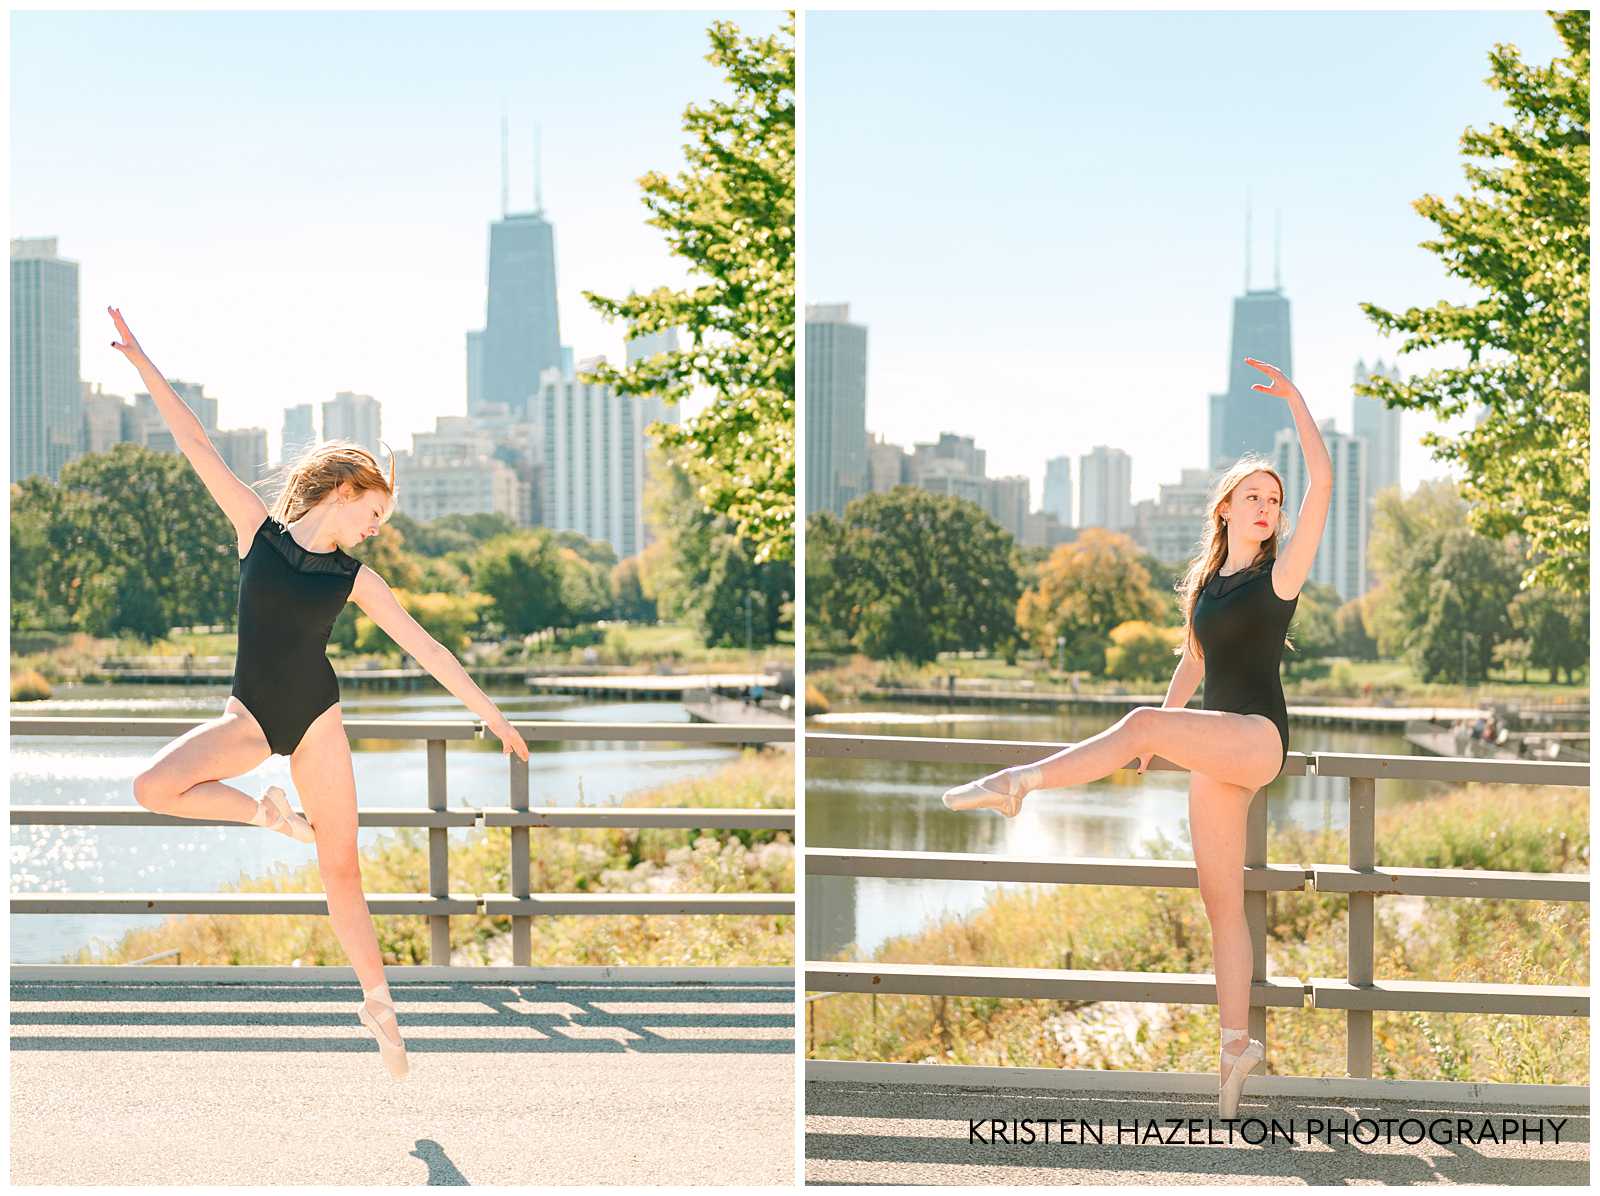 Ballet Senior Photos in Chicago at Lincoln Park Zoo, by Chicago Senior and Family Photographer Kristen Hazelton